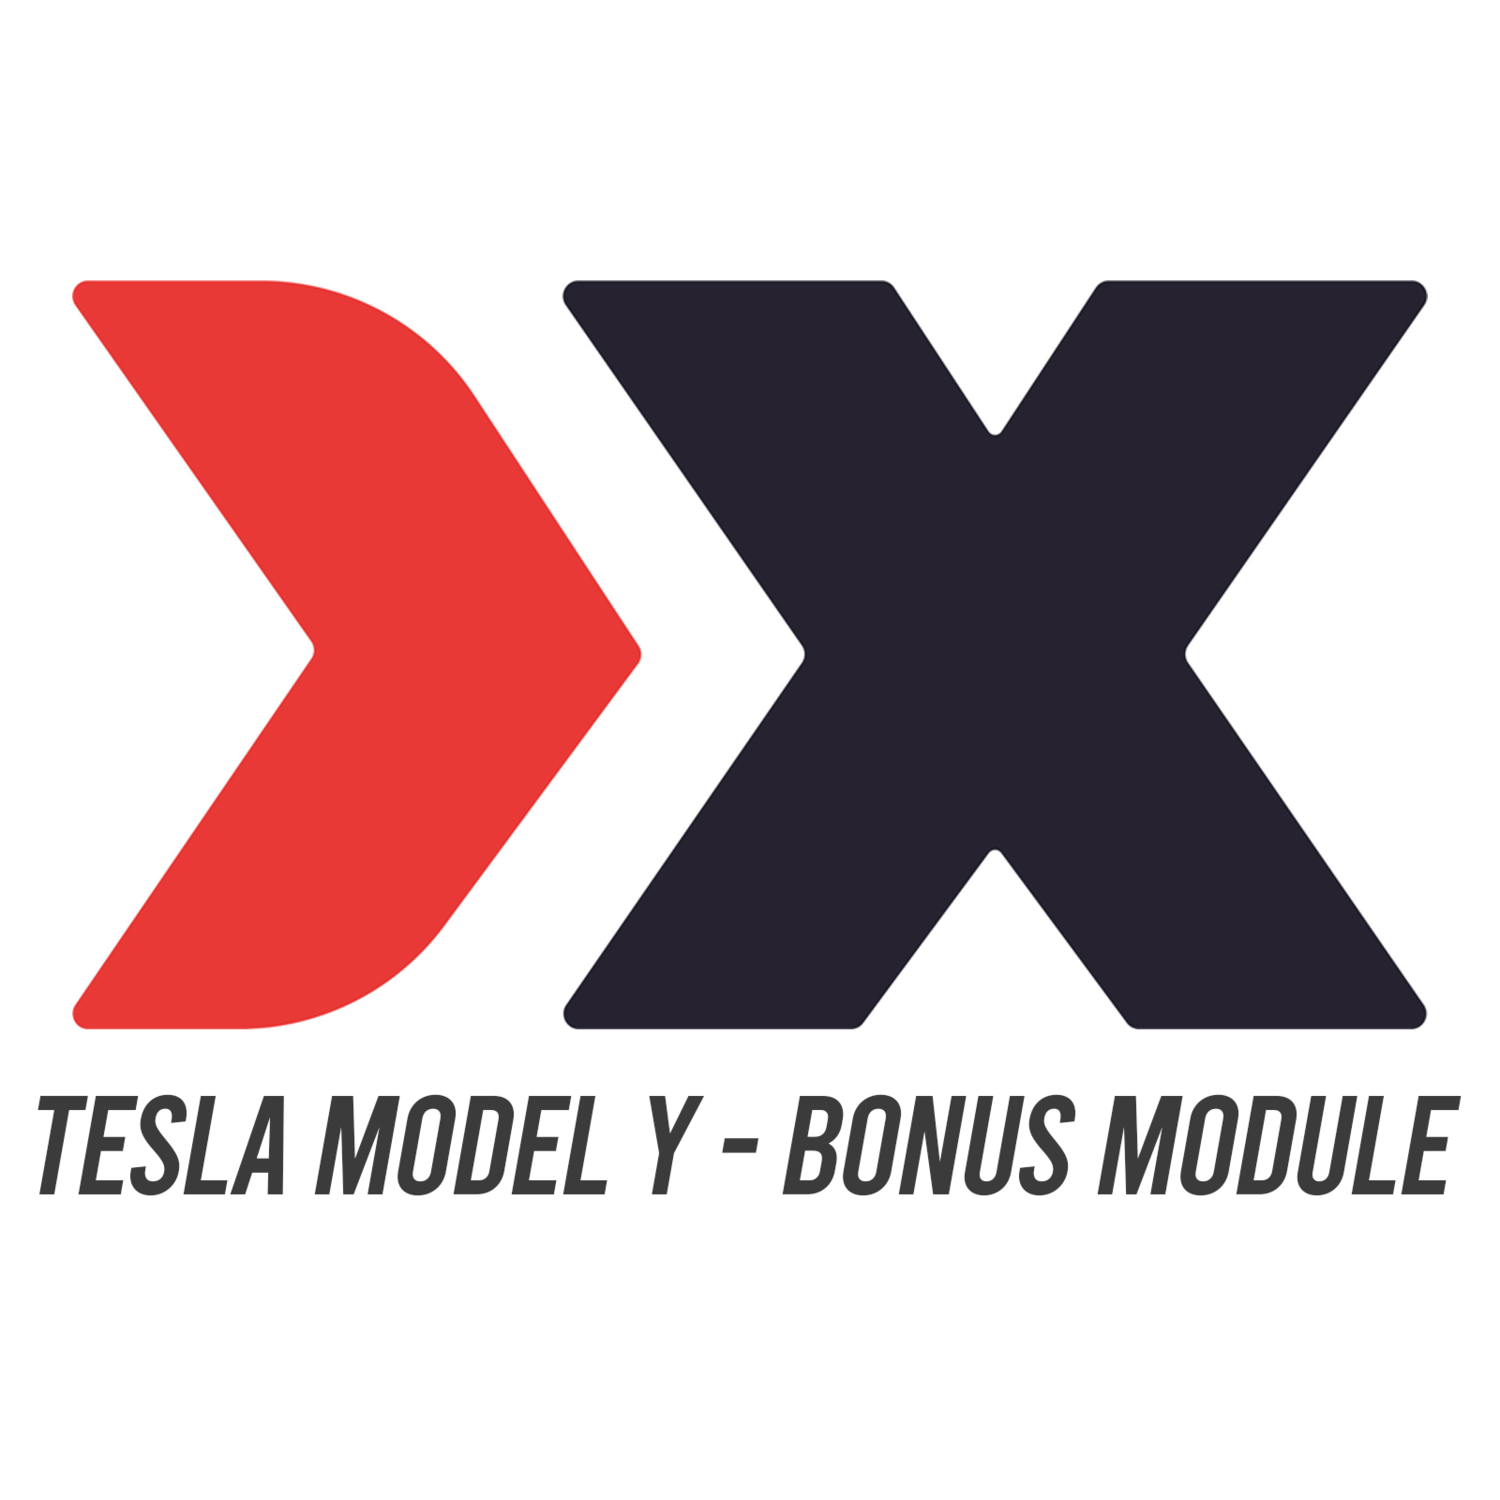 BONUS MODULE - Tesla Model Y